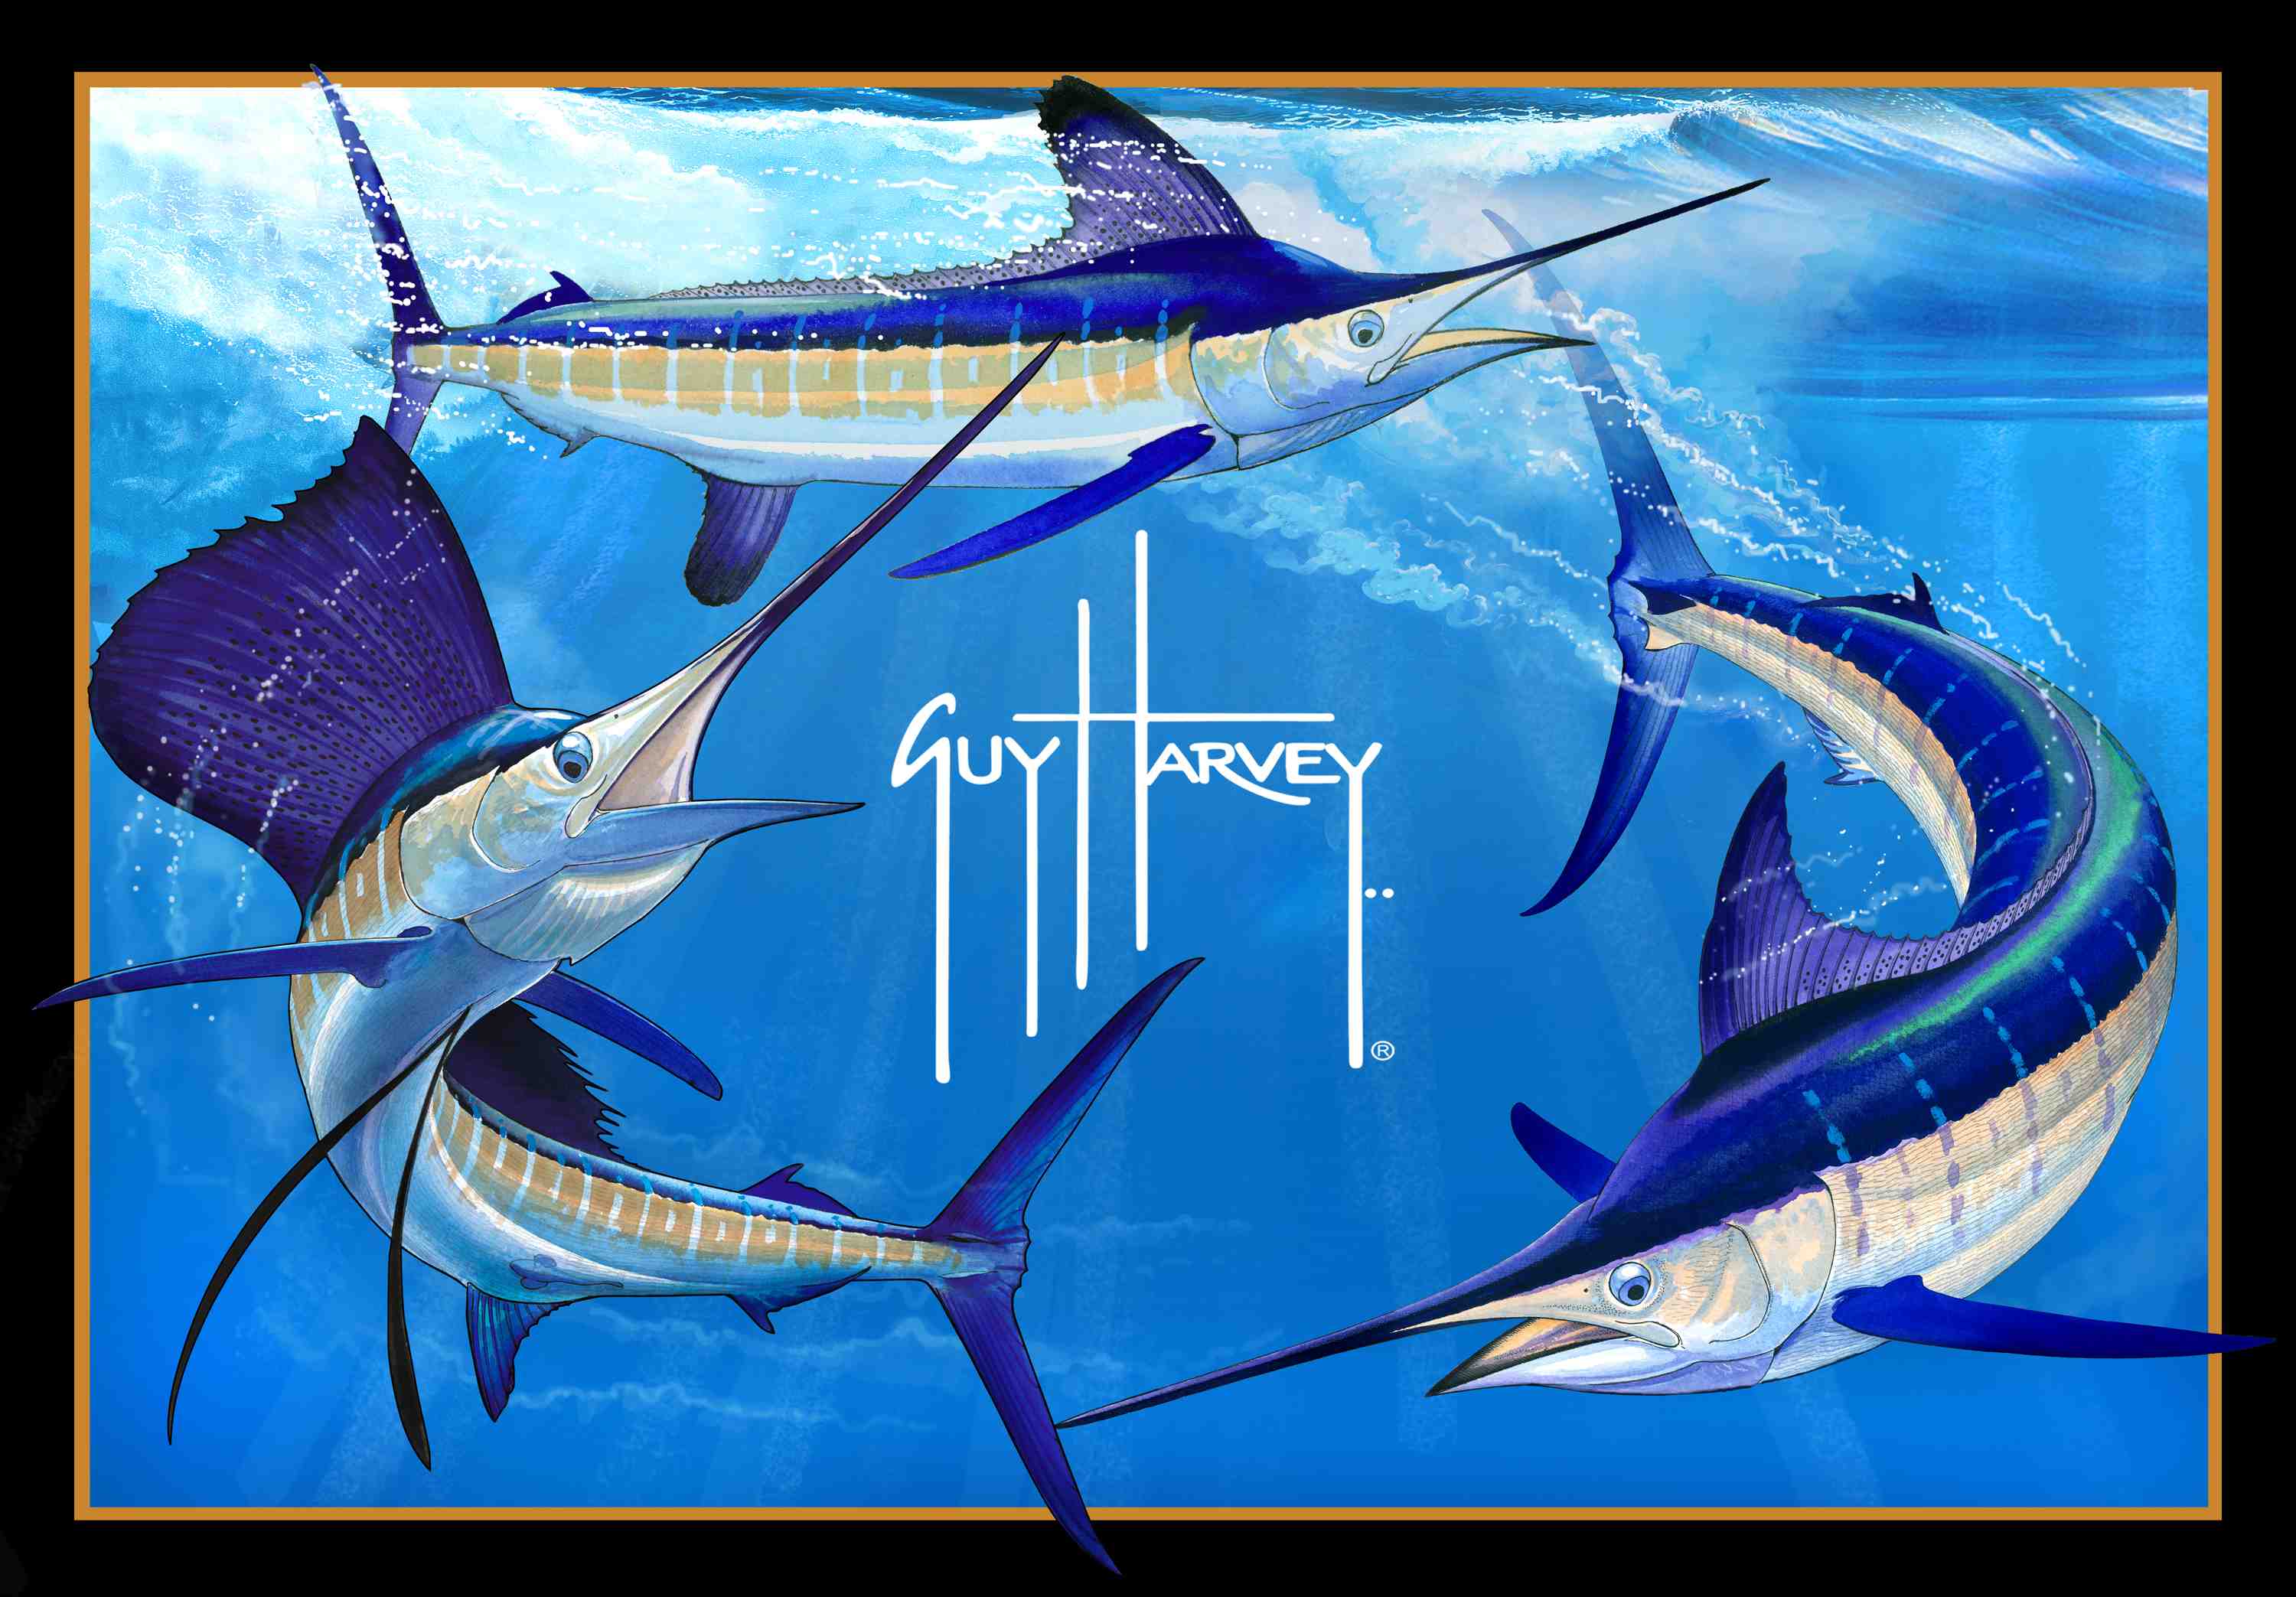 ragazzo harvey wallpaper,pesce spada,istioforo,marlin blu atlantico,marlin,pesce